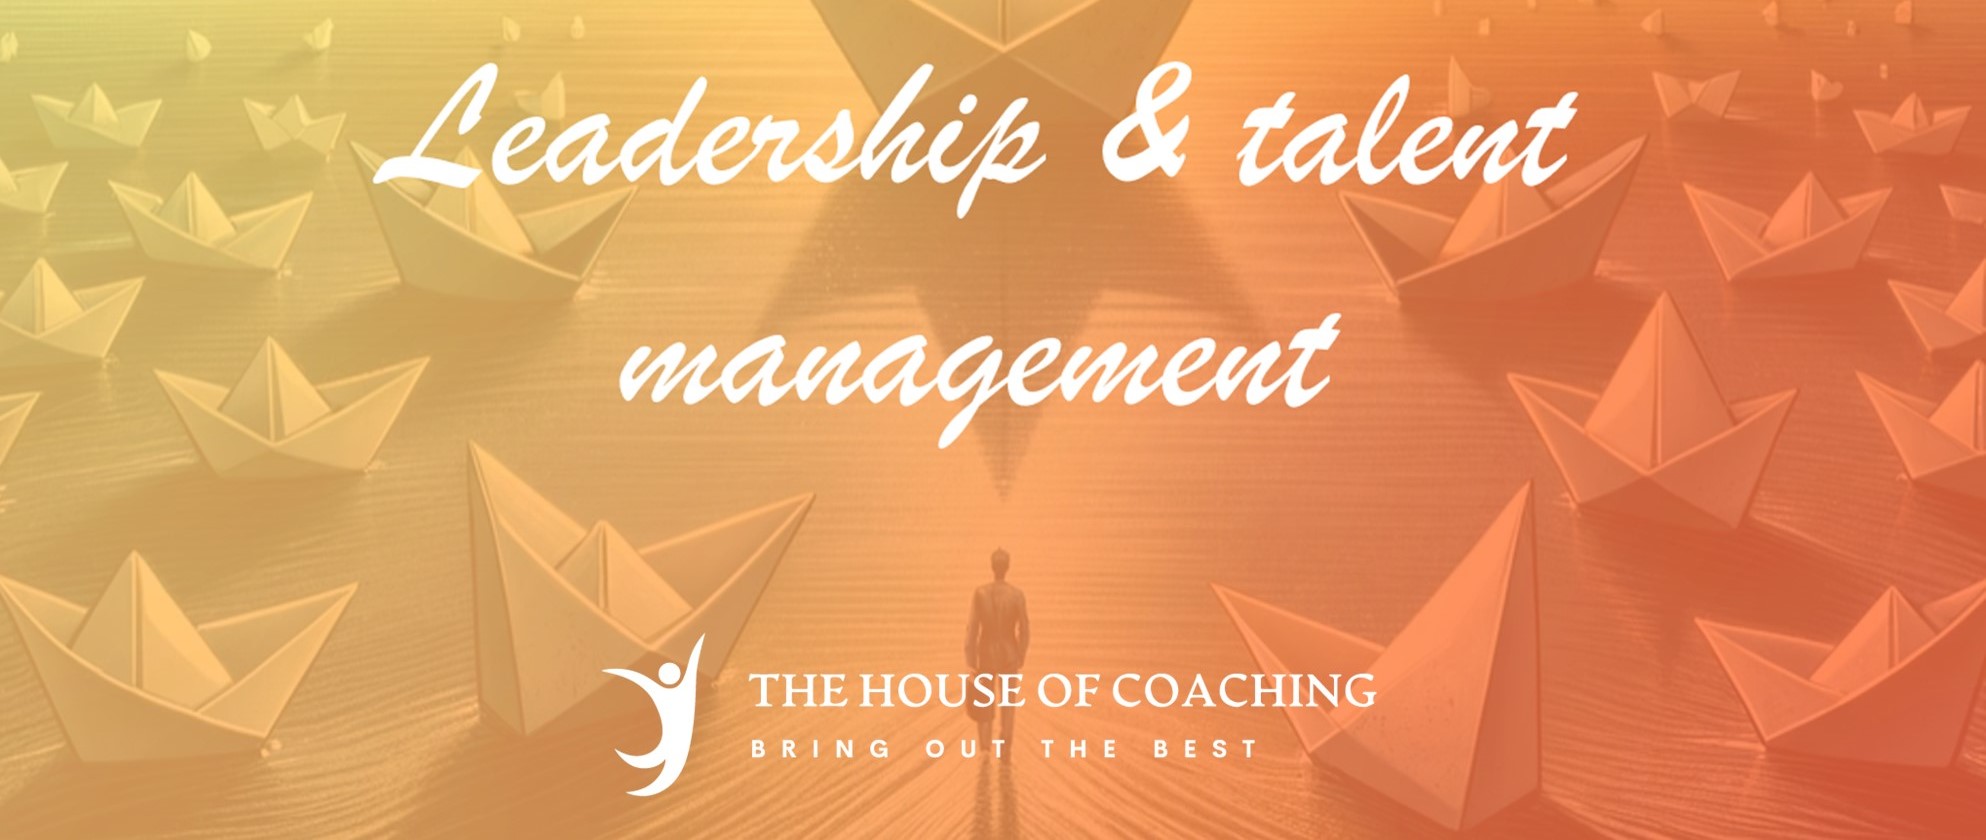 Leadership & talent management 